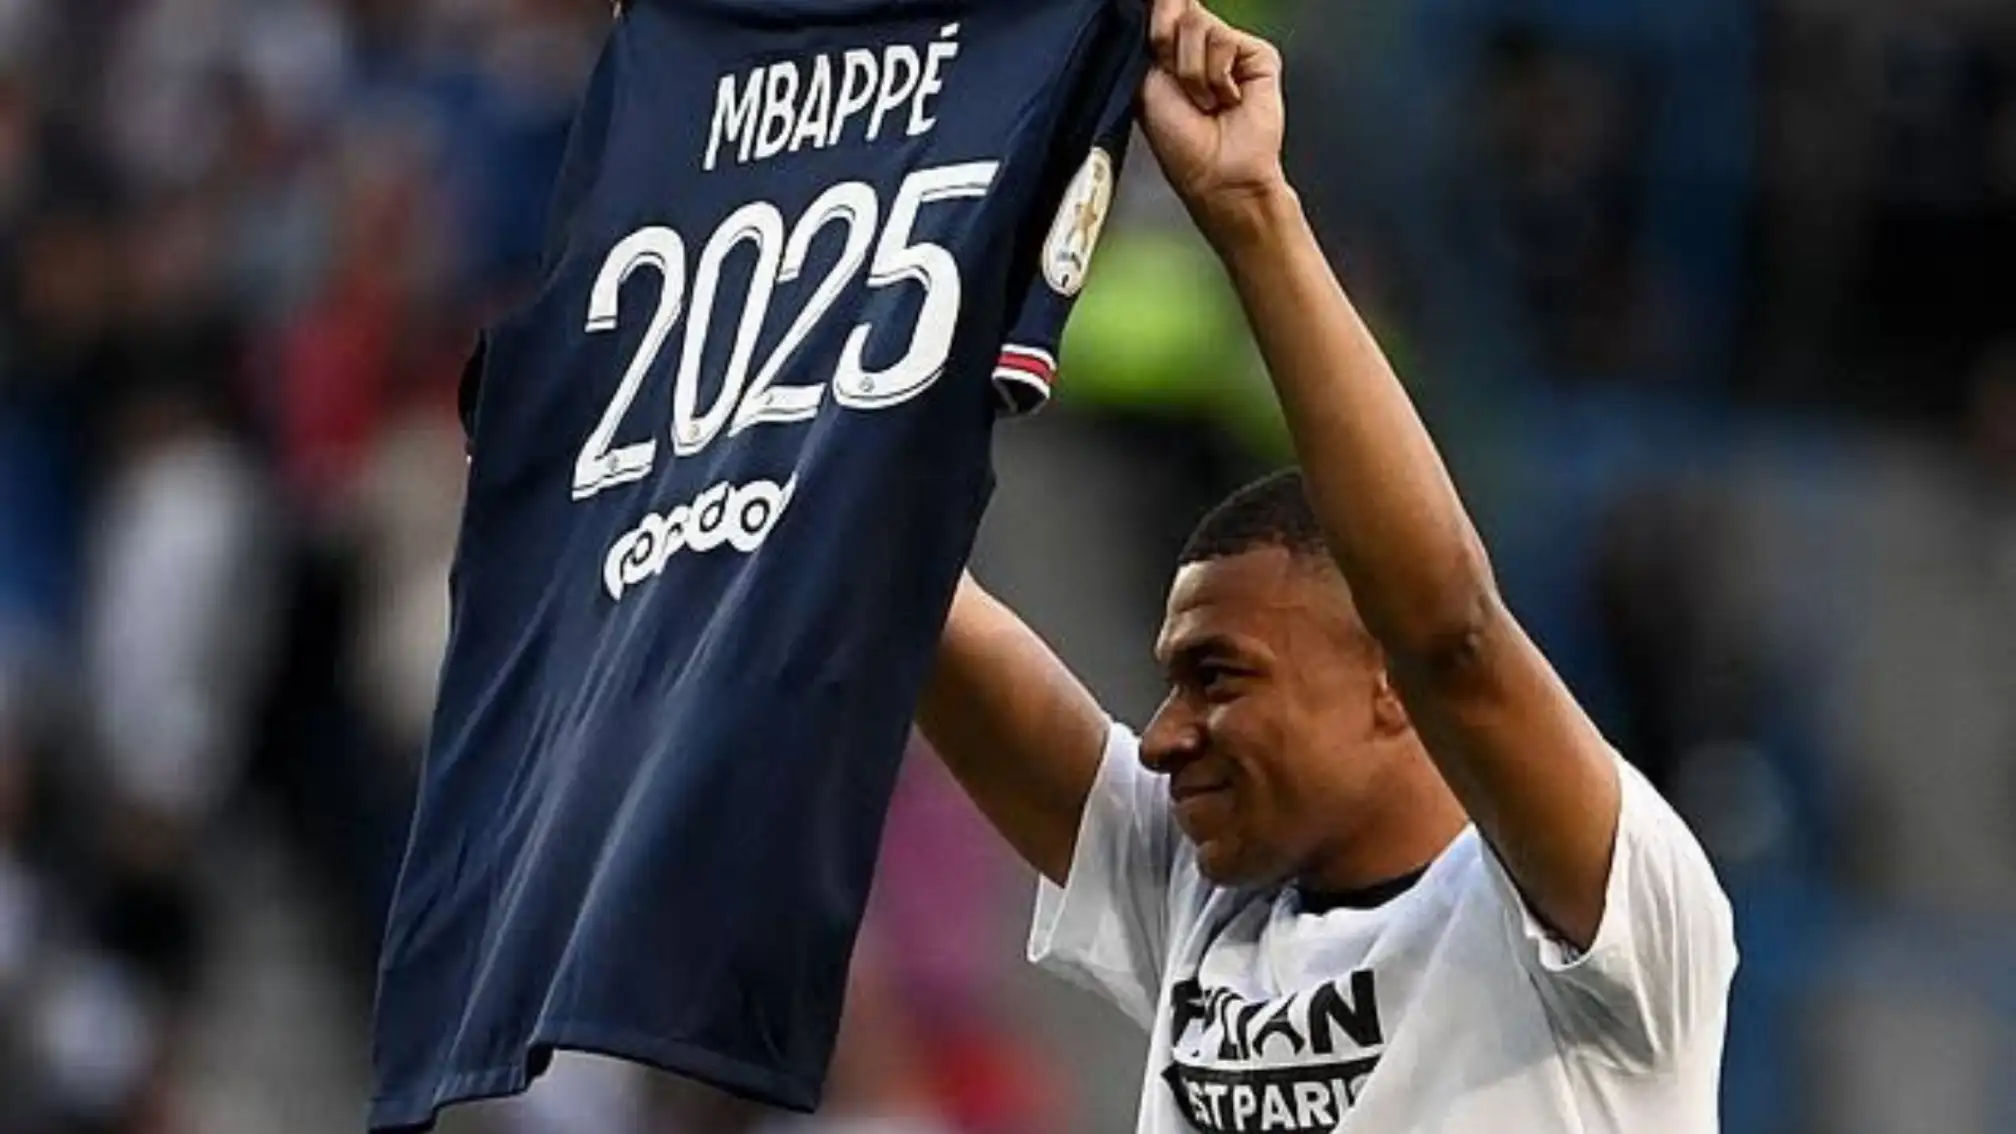 Den franske fotbollschefen slår LaLiga ledare över Mbappe kommentarer